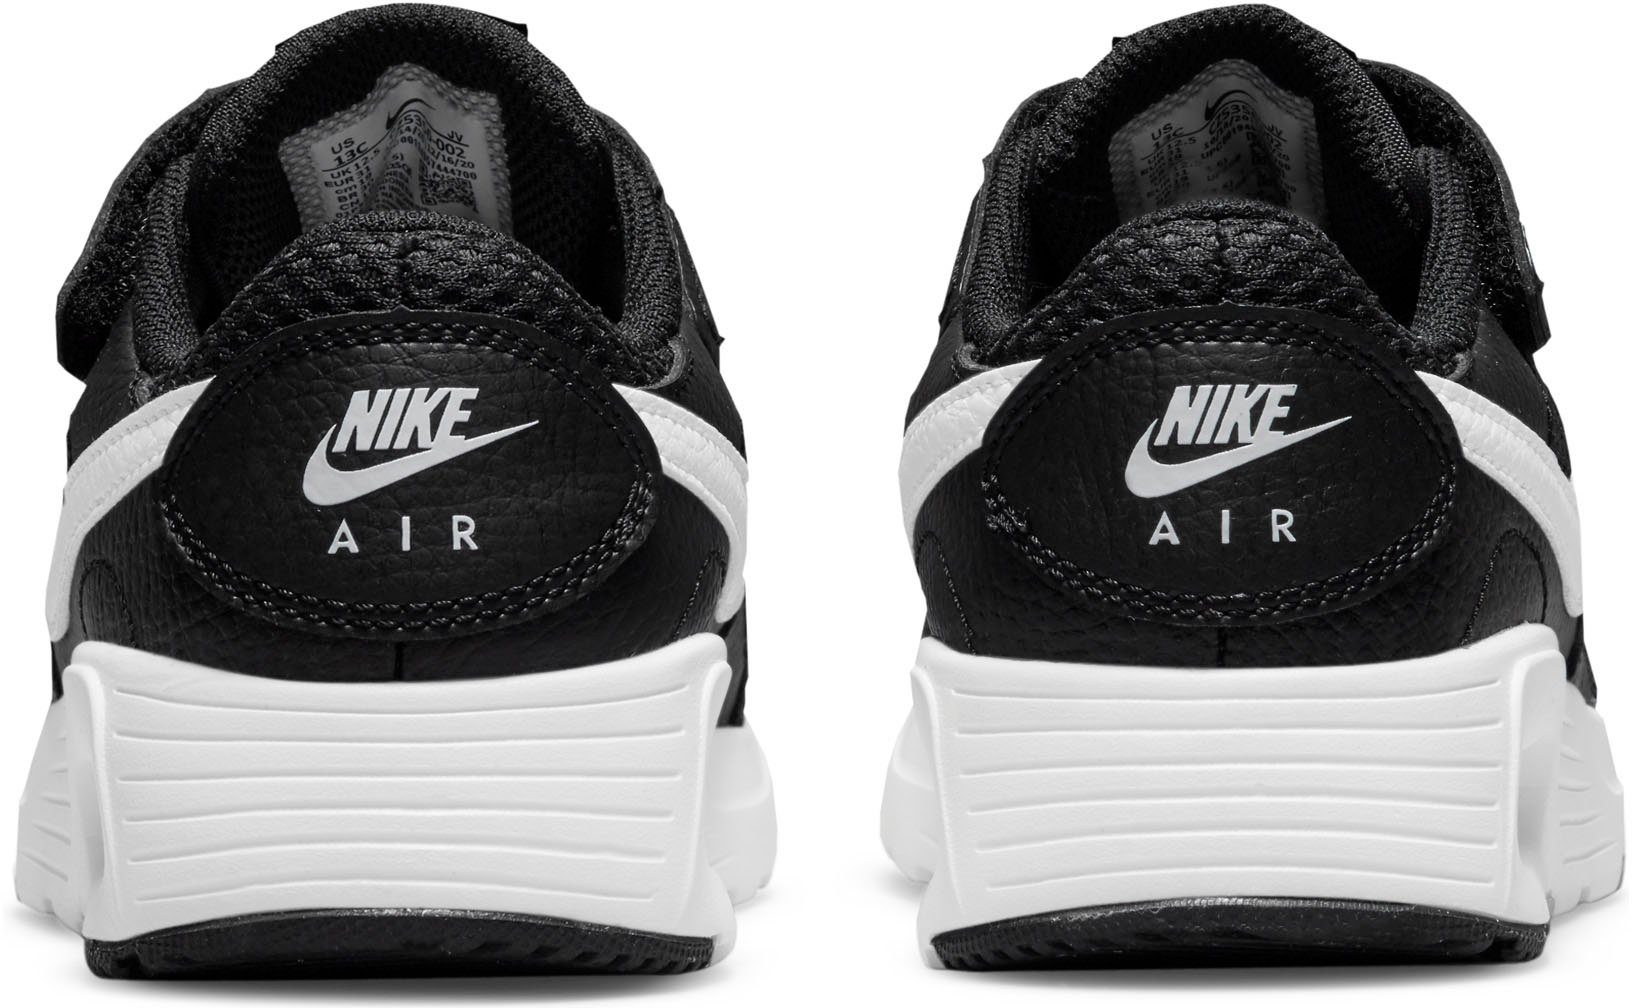 Nike Sportswear AIR MAX schwarz-weiß SC (PS) Sneaker